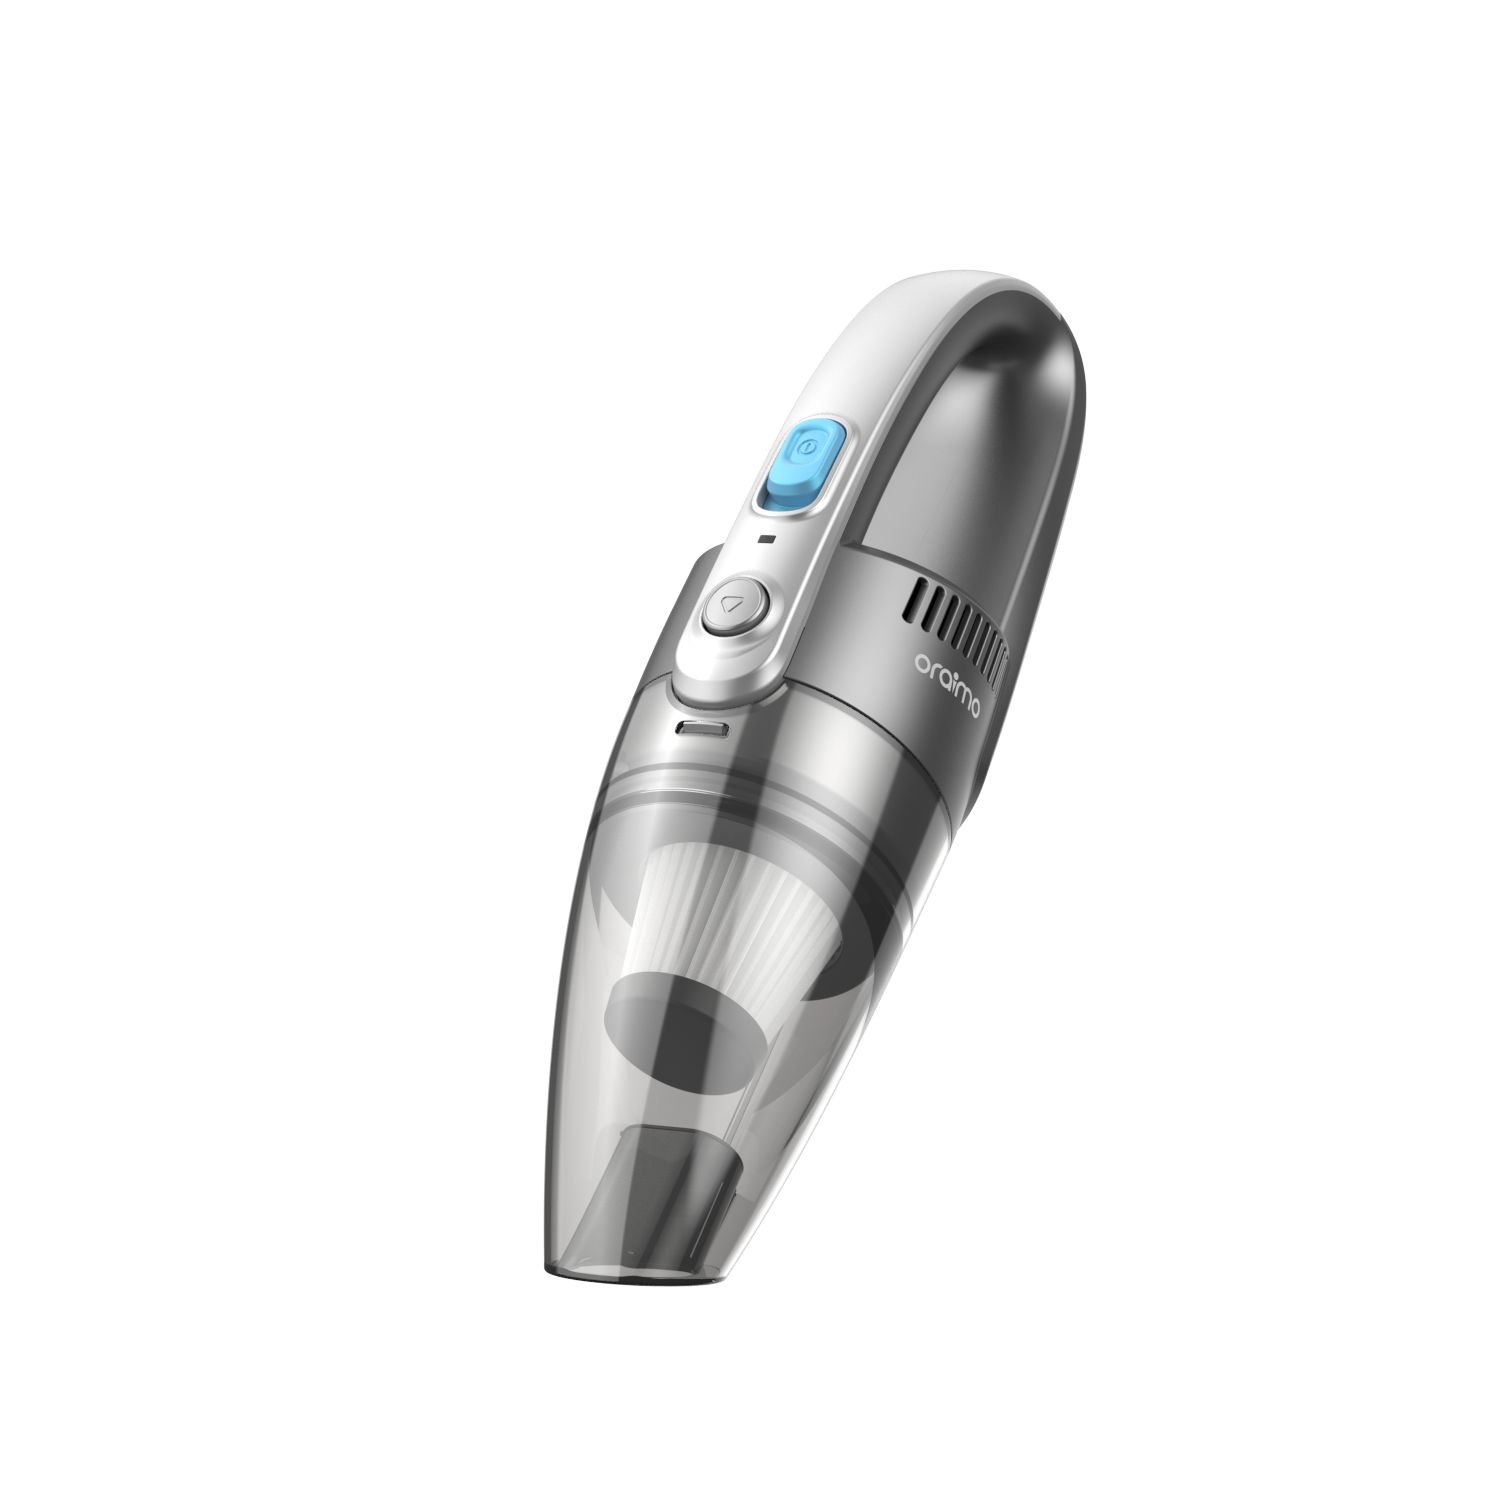 Oraimo Cordless Vacuum Cleaner, 1.39 lb Ultra Lightweight Handheld Cordless  Vacuum Cleaner, 3H Fast-Charge, Multi-Surface